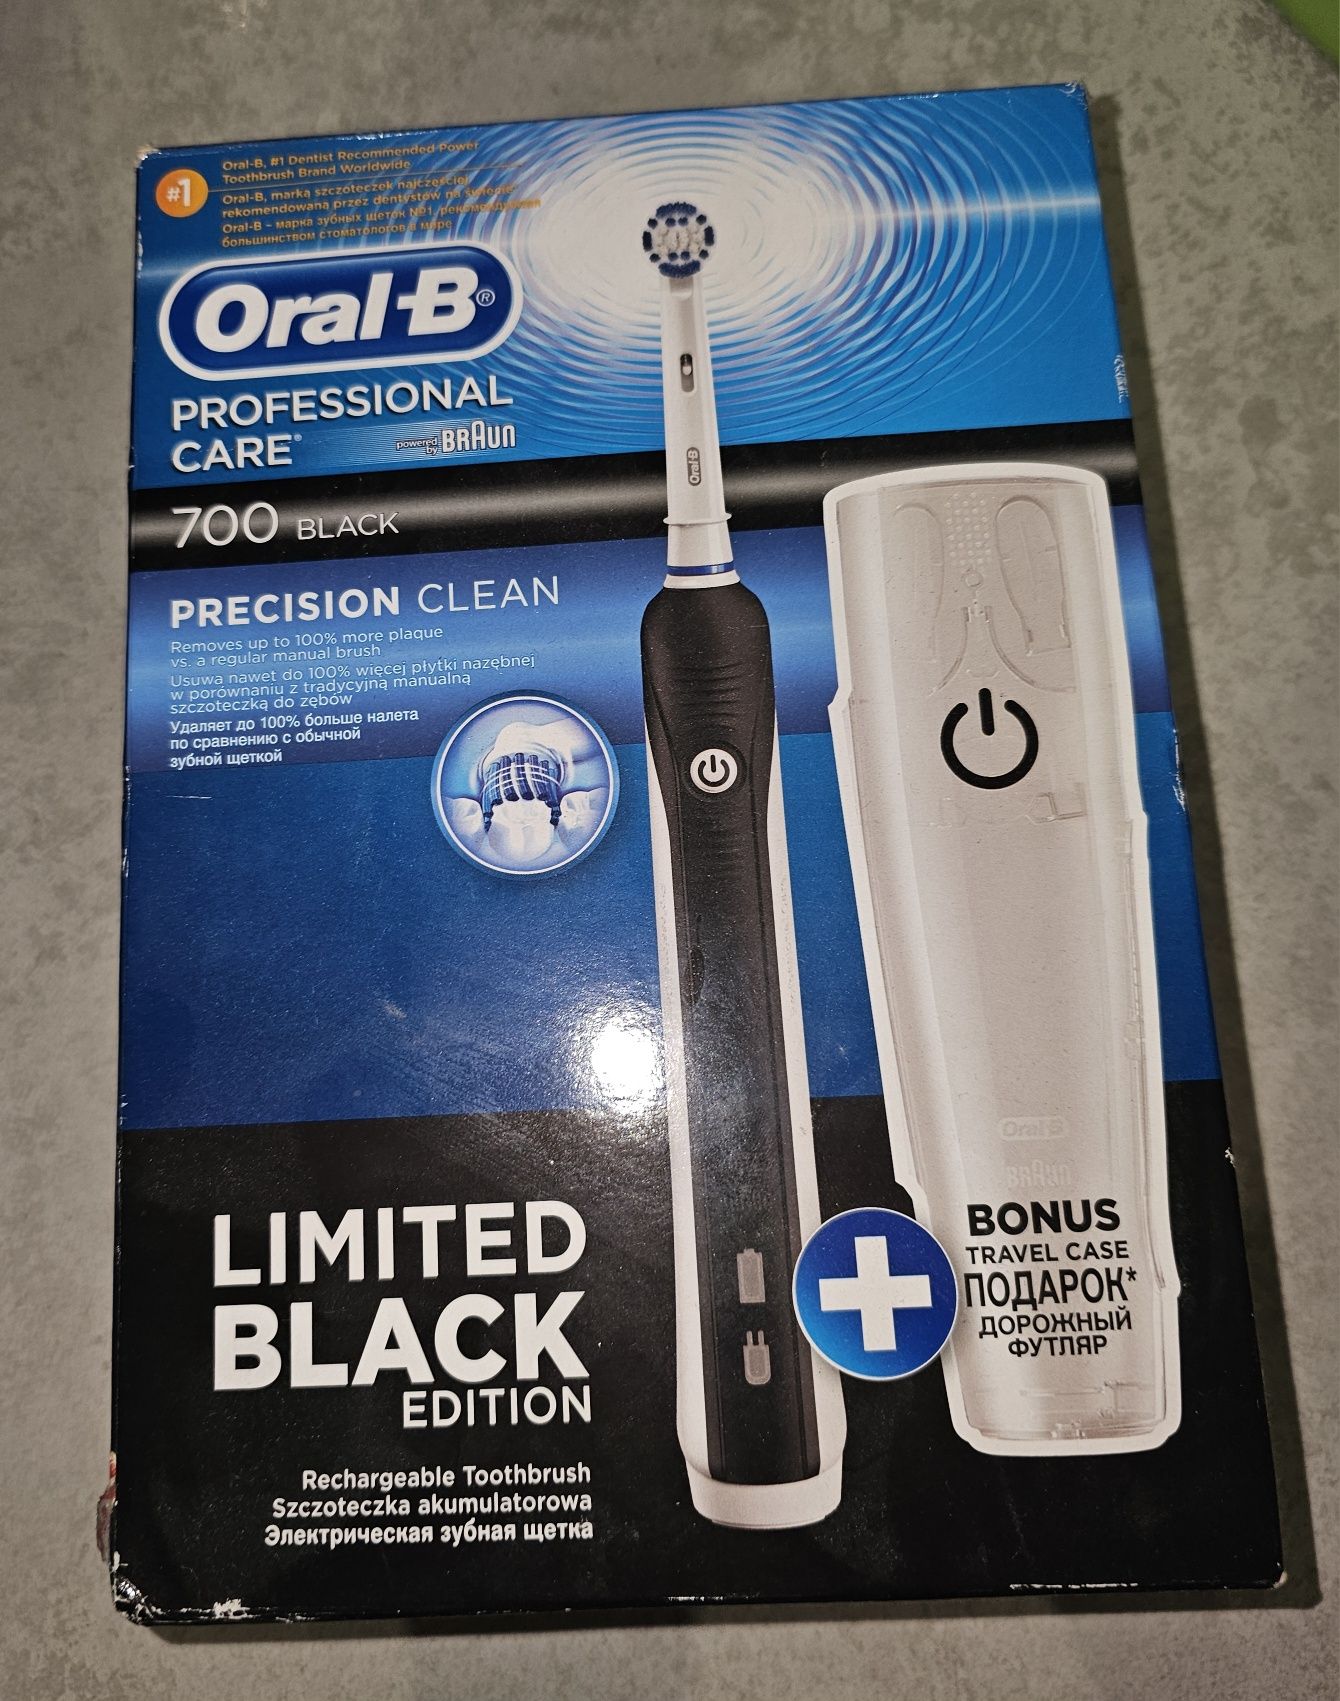 Oral-B Professional Care 700 BLACK